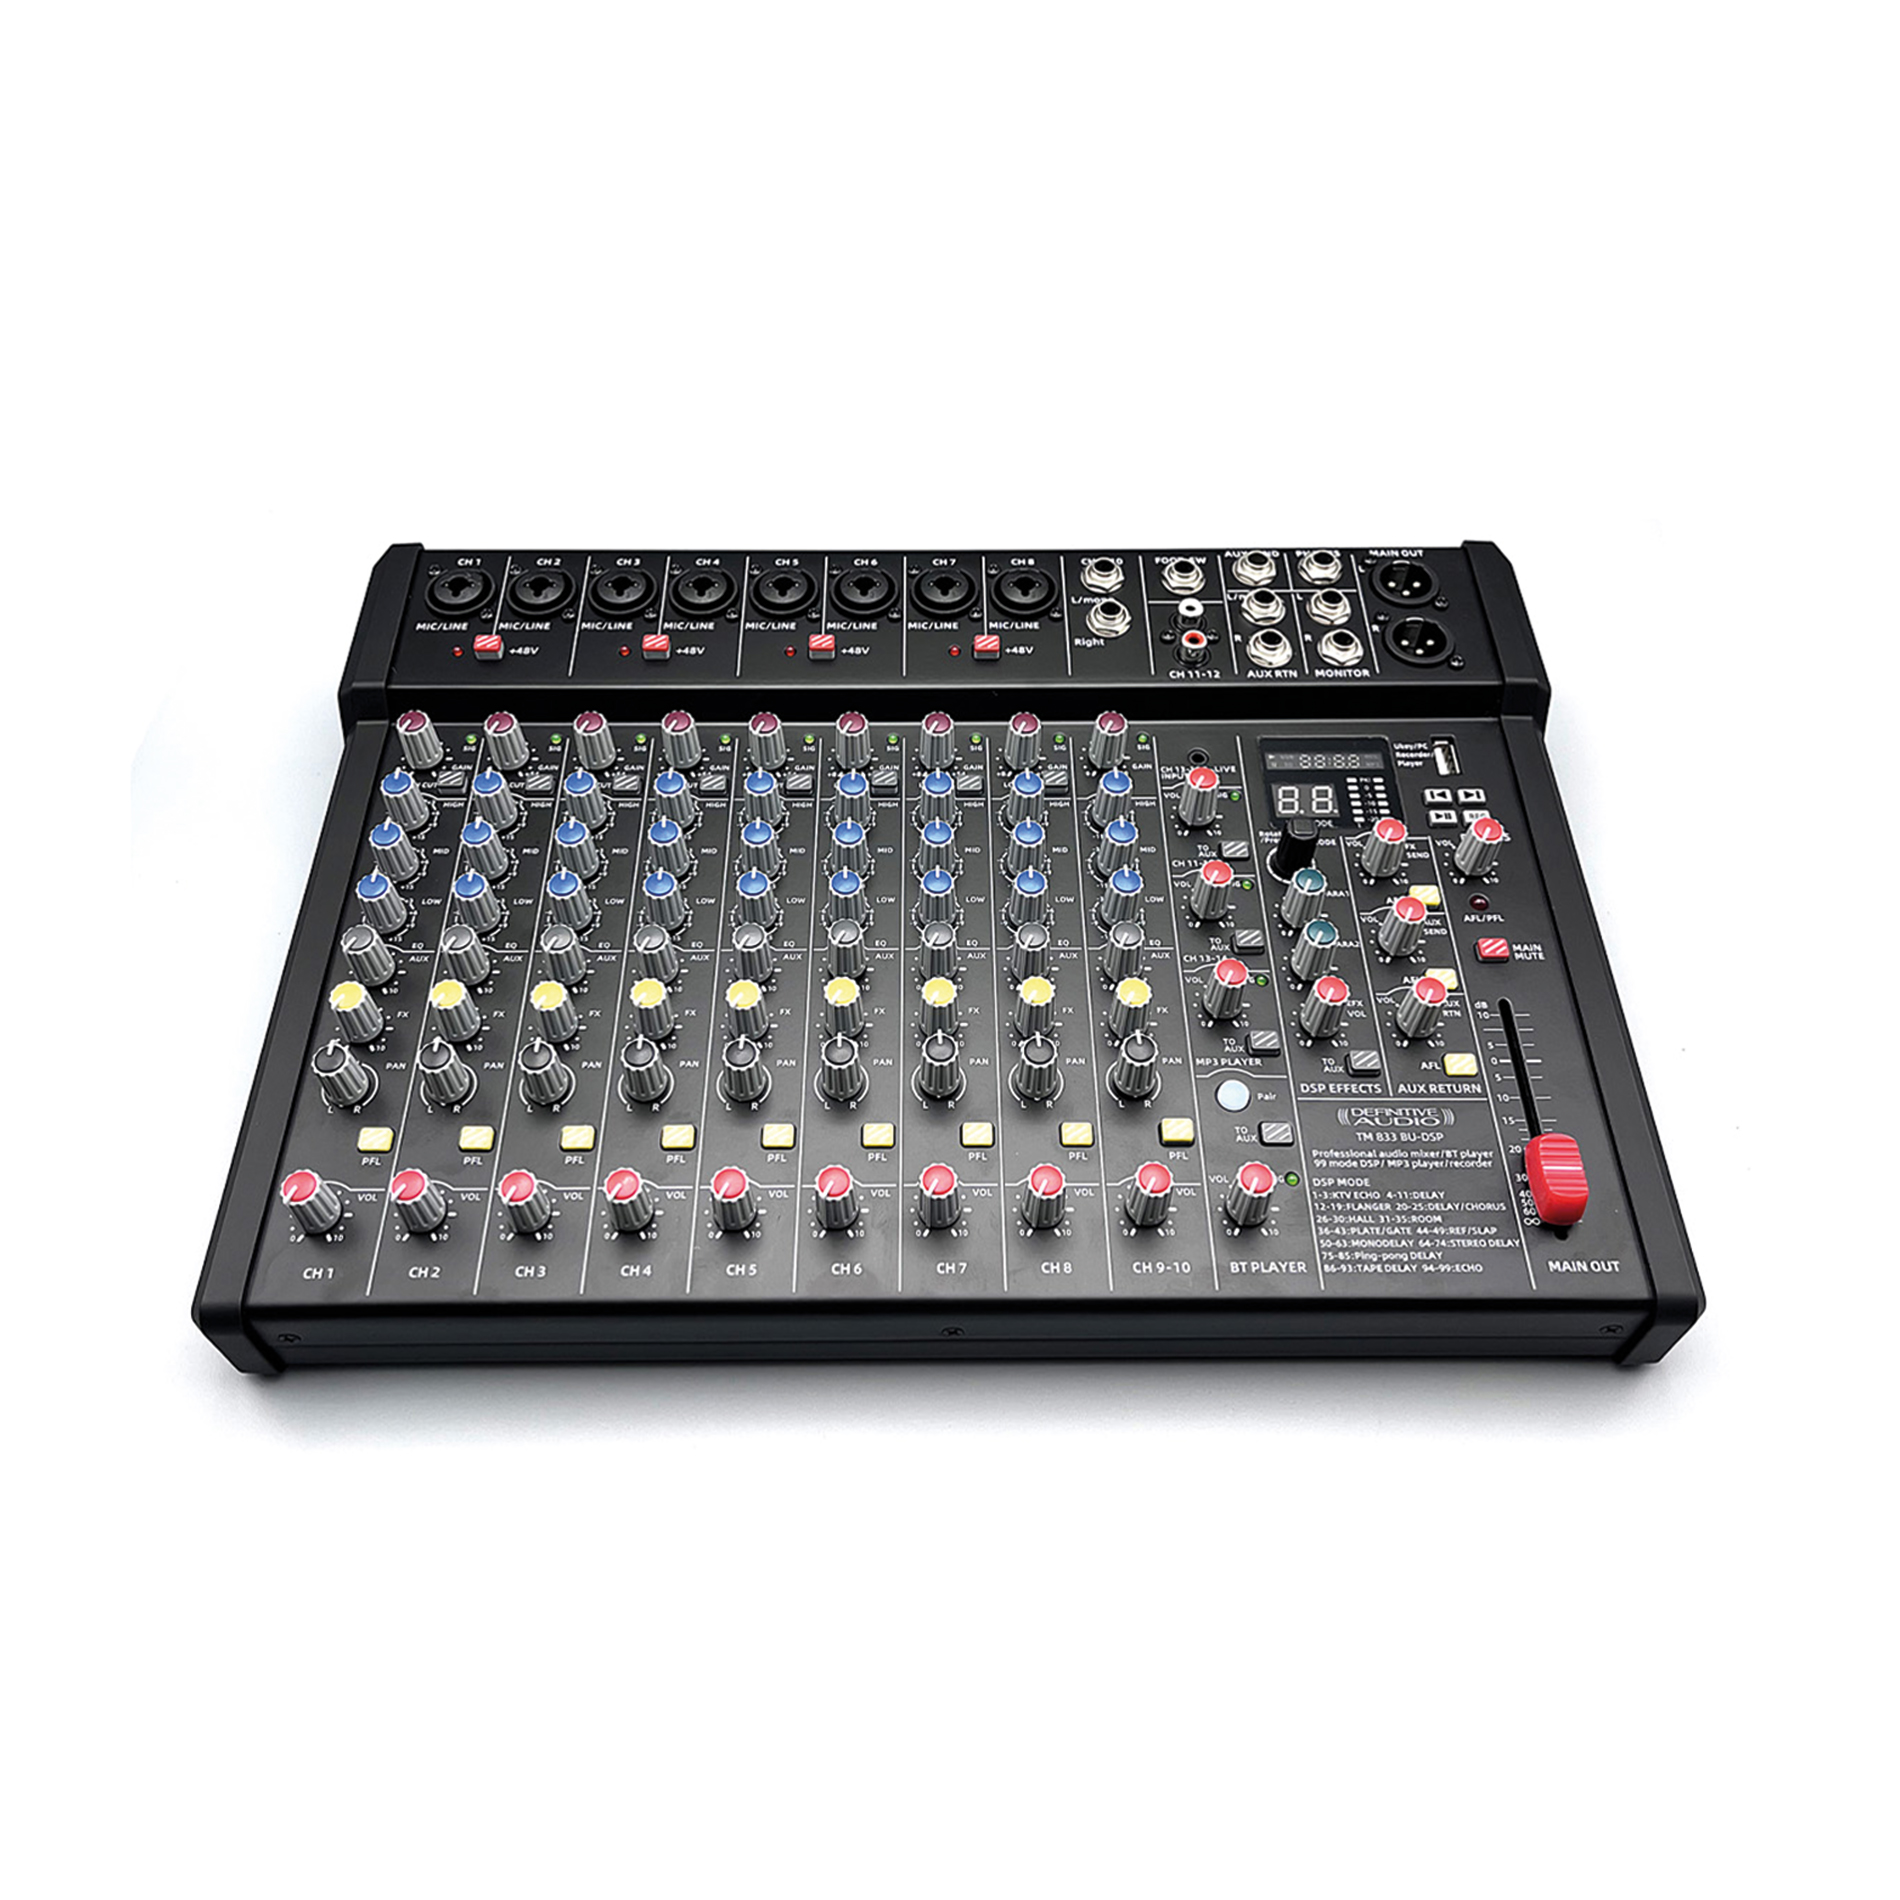 Definitive Audio Tm 833 Bu-dsp - Analog mixing desk - Variation 8